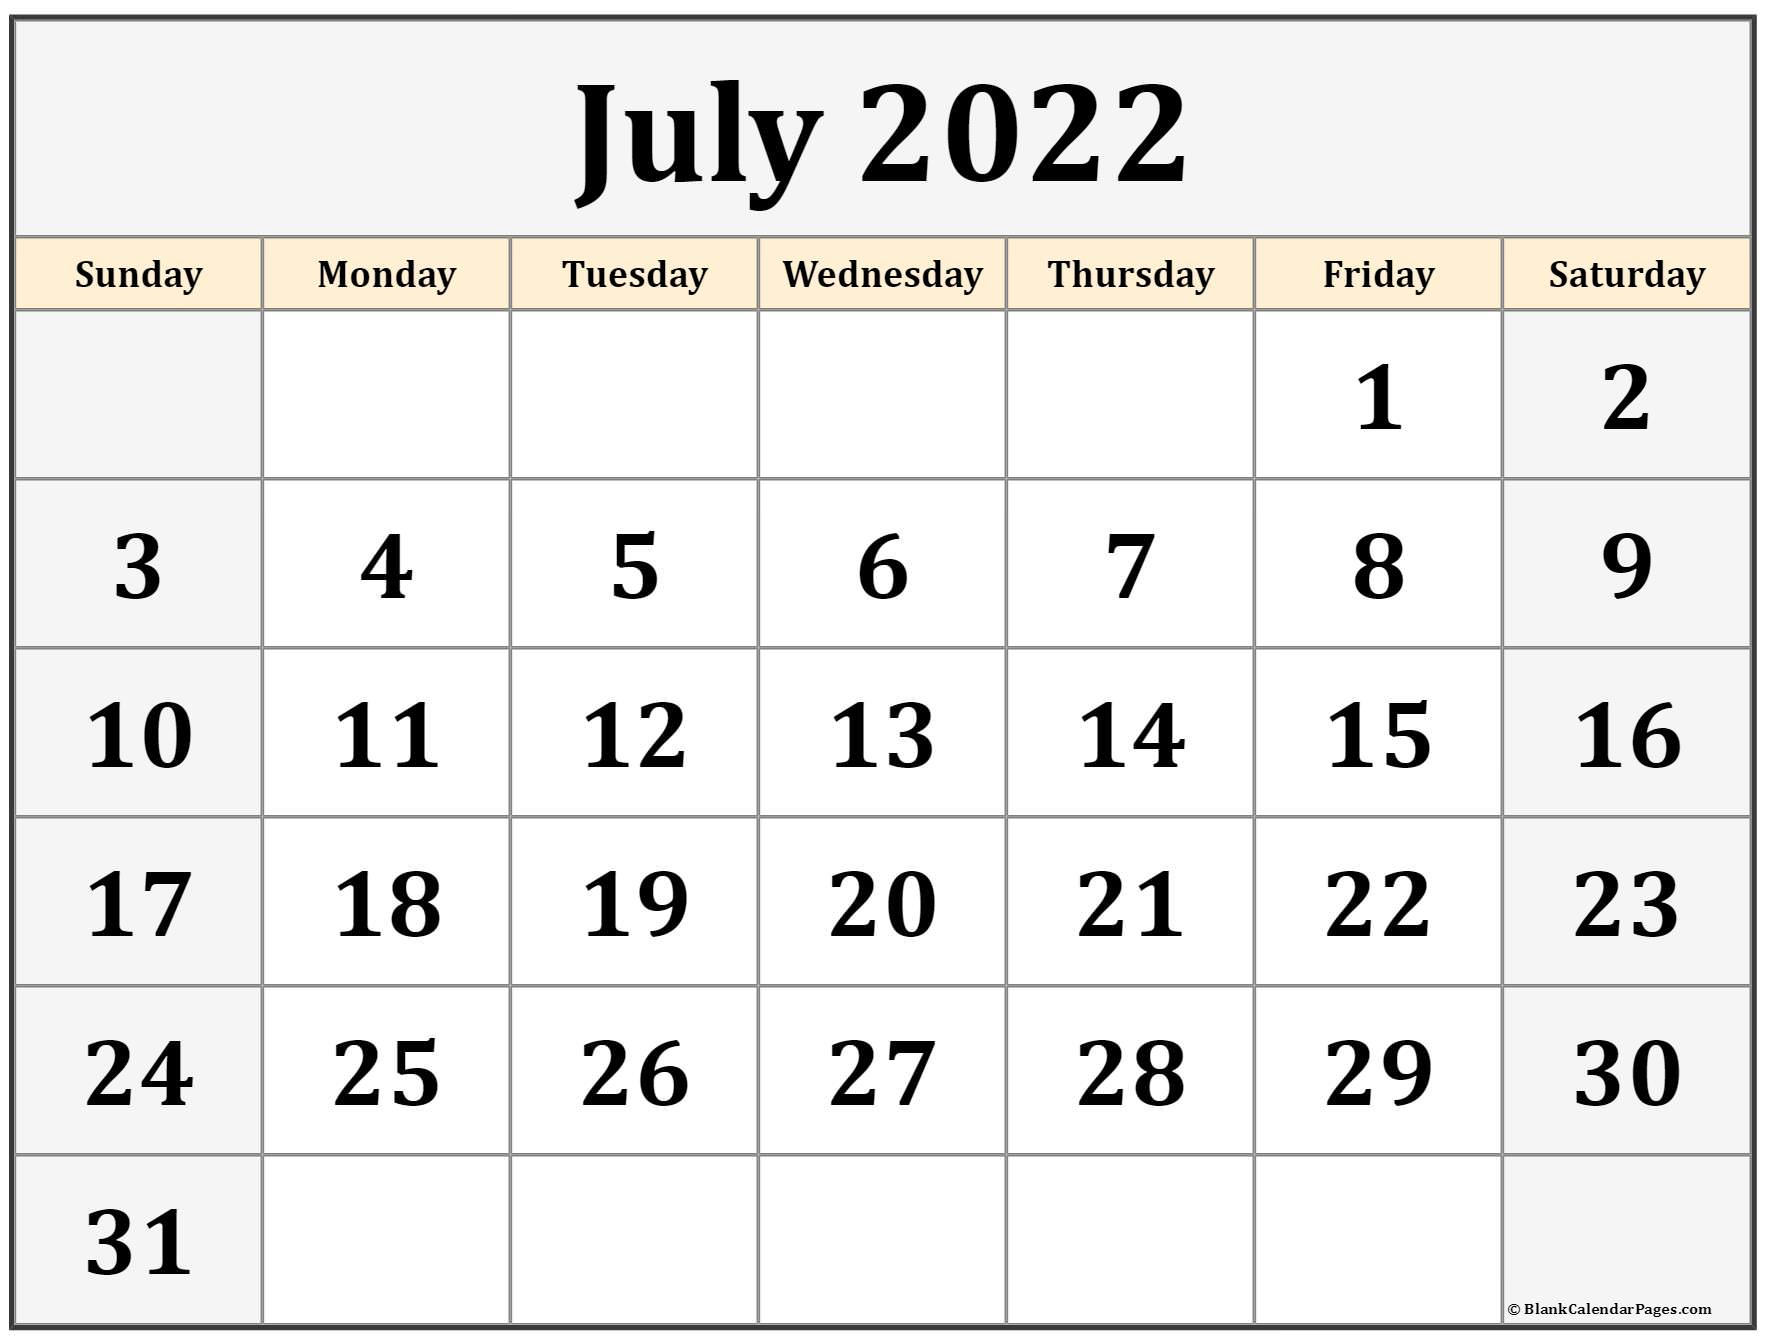 Get July 2022 Calendar Marathi